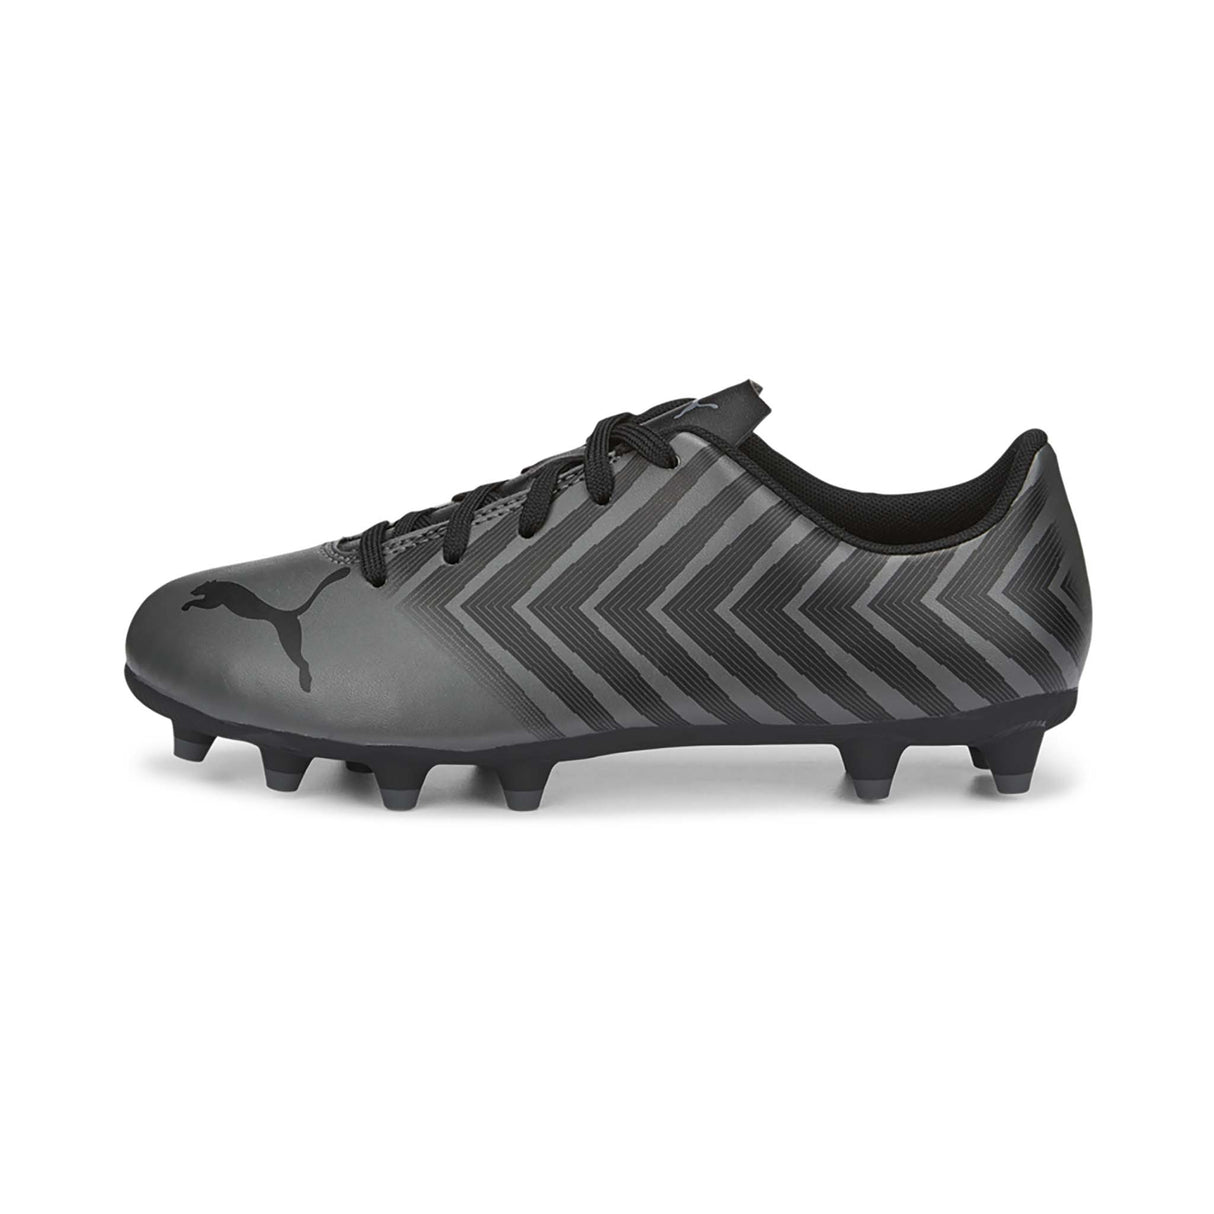 Puma Tacto II FG/AG Junior souliers soccer crampons gris noir enfant lateral